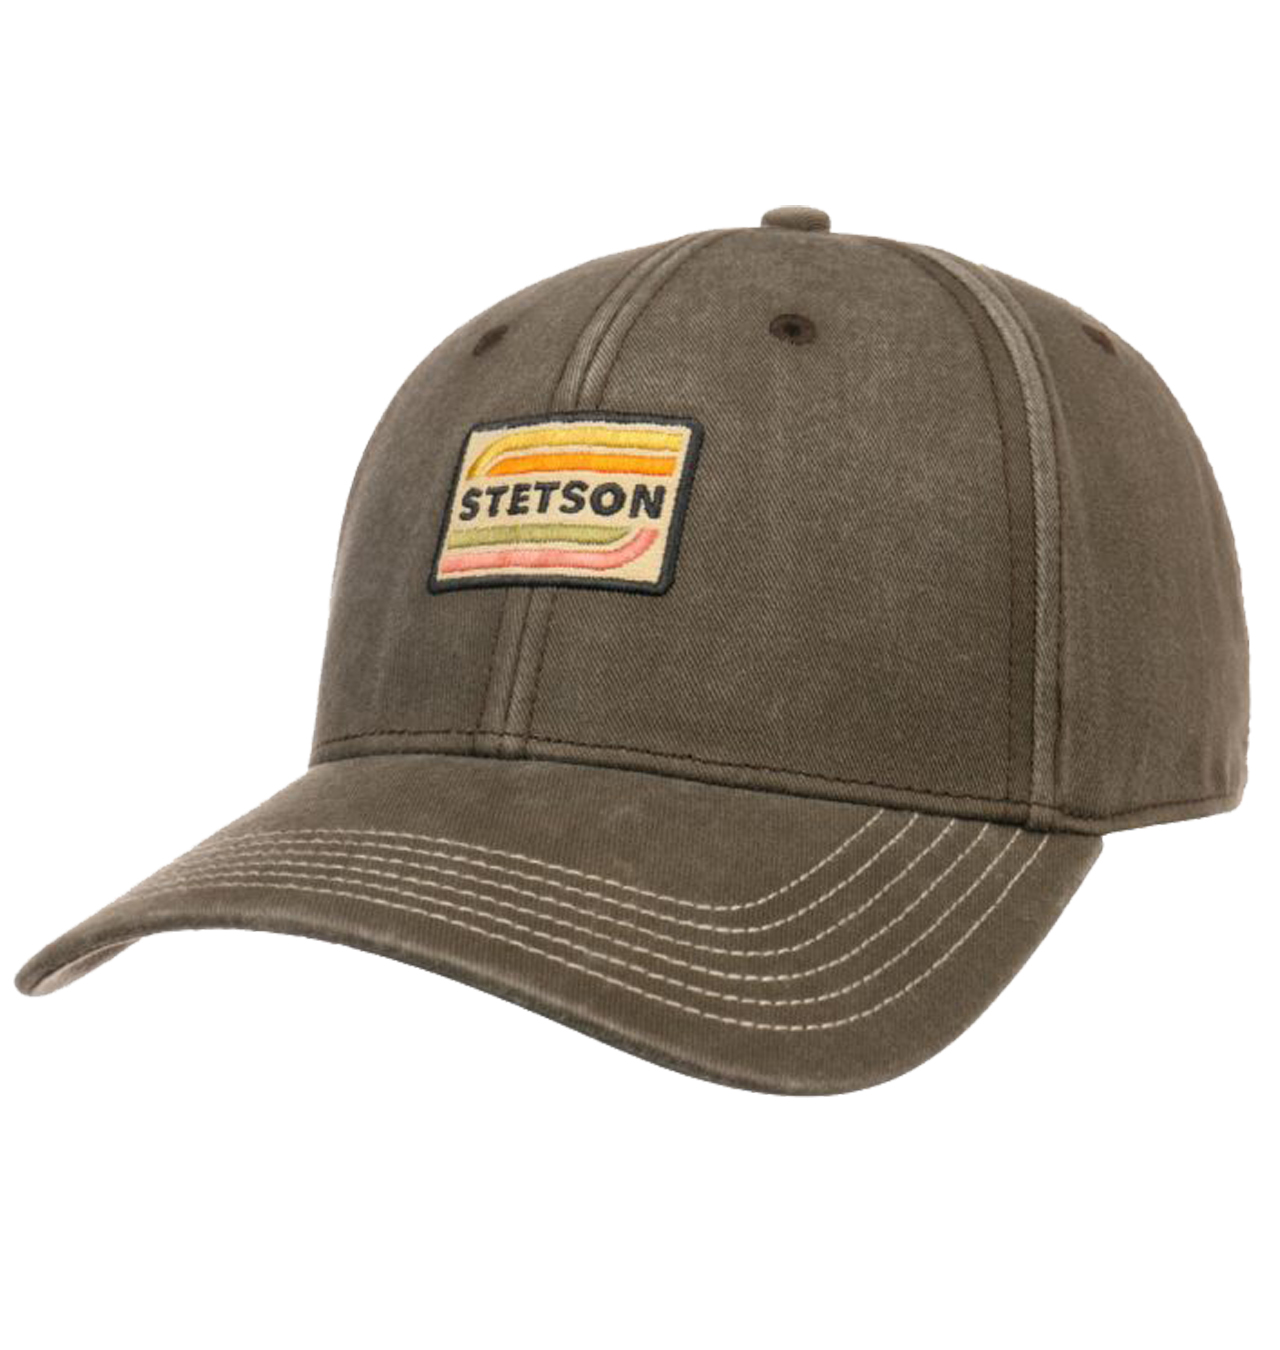 Stetson - Chino Baseball Cap - Pine